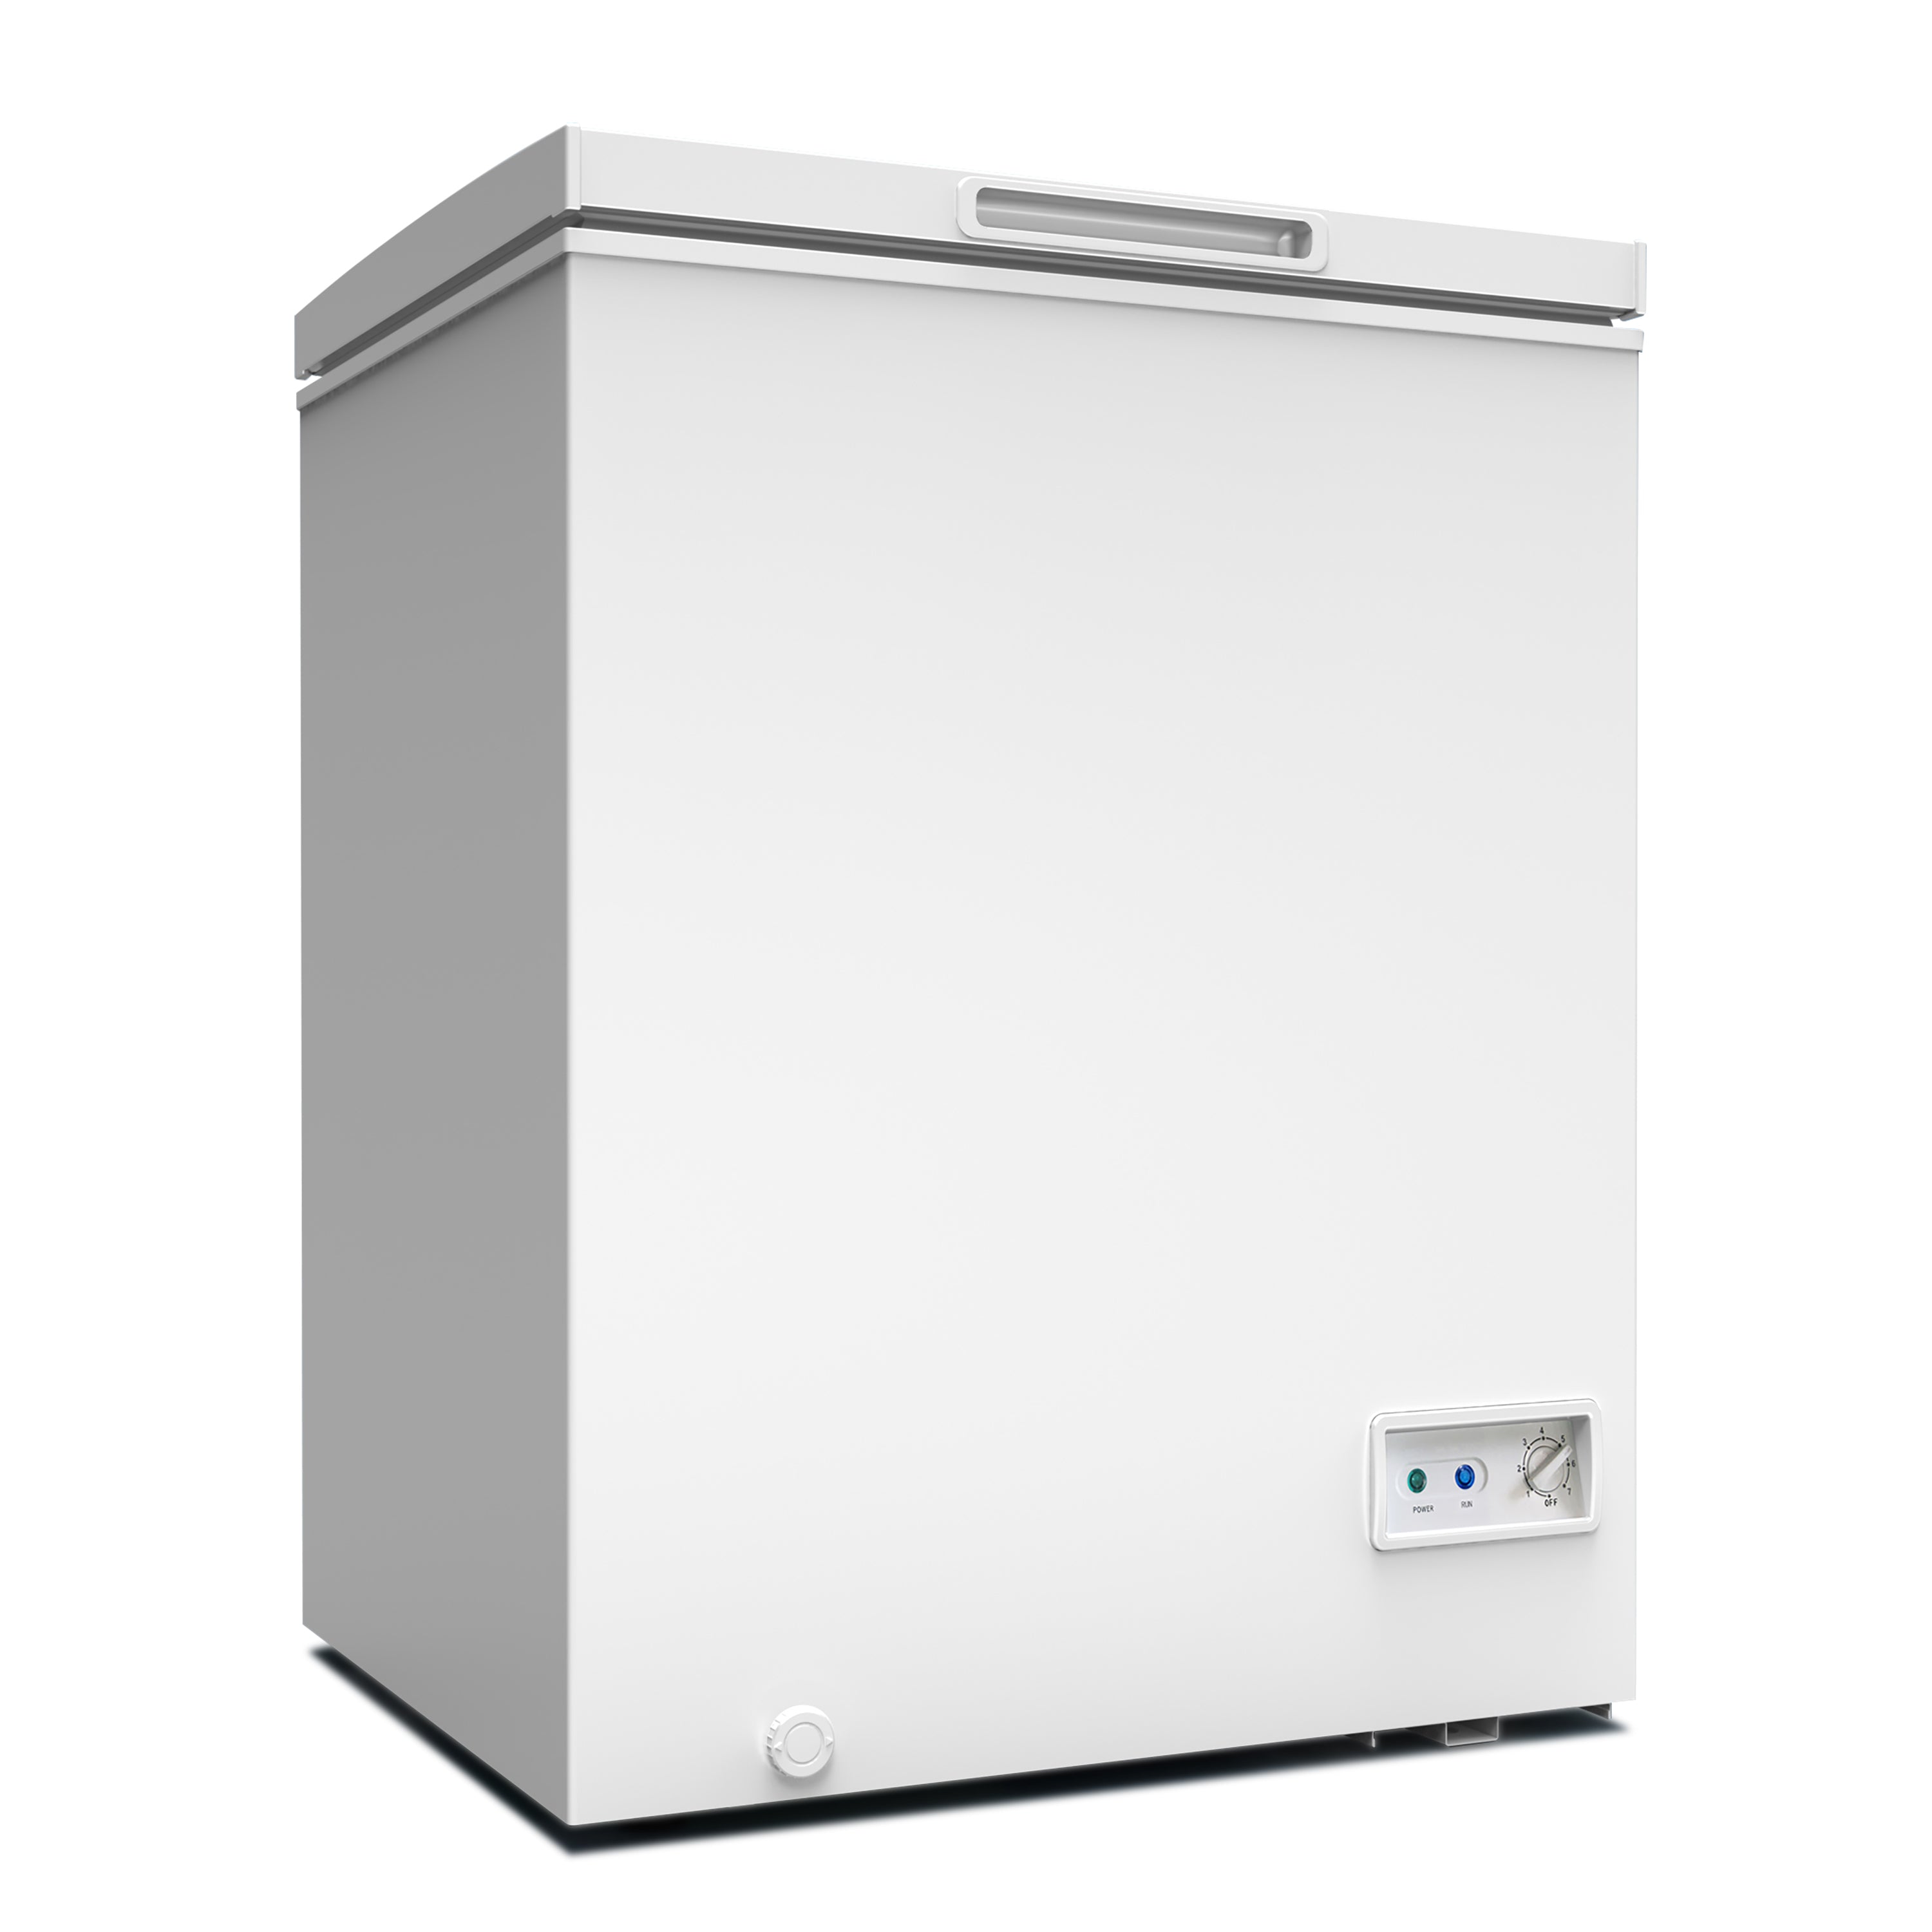 Avanti - CF7F0W, Avanti Garage Ready Chest Freezer, 7.0 cu. ft. Capacity, in White